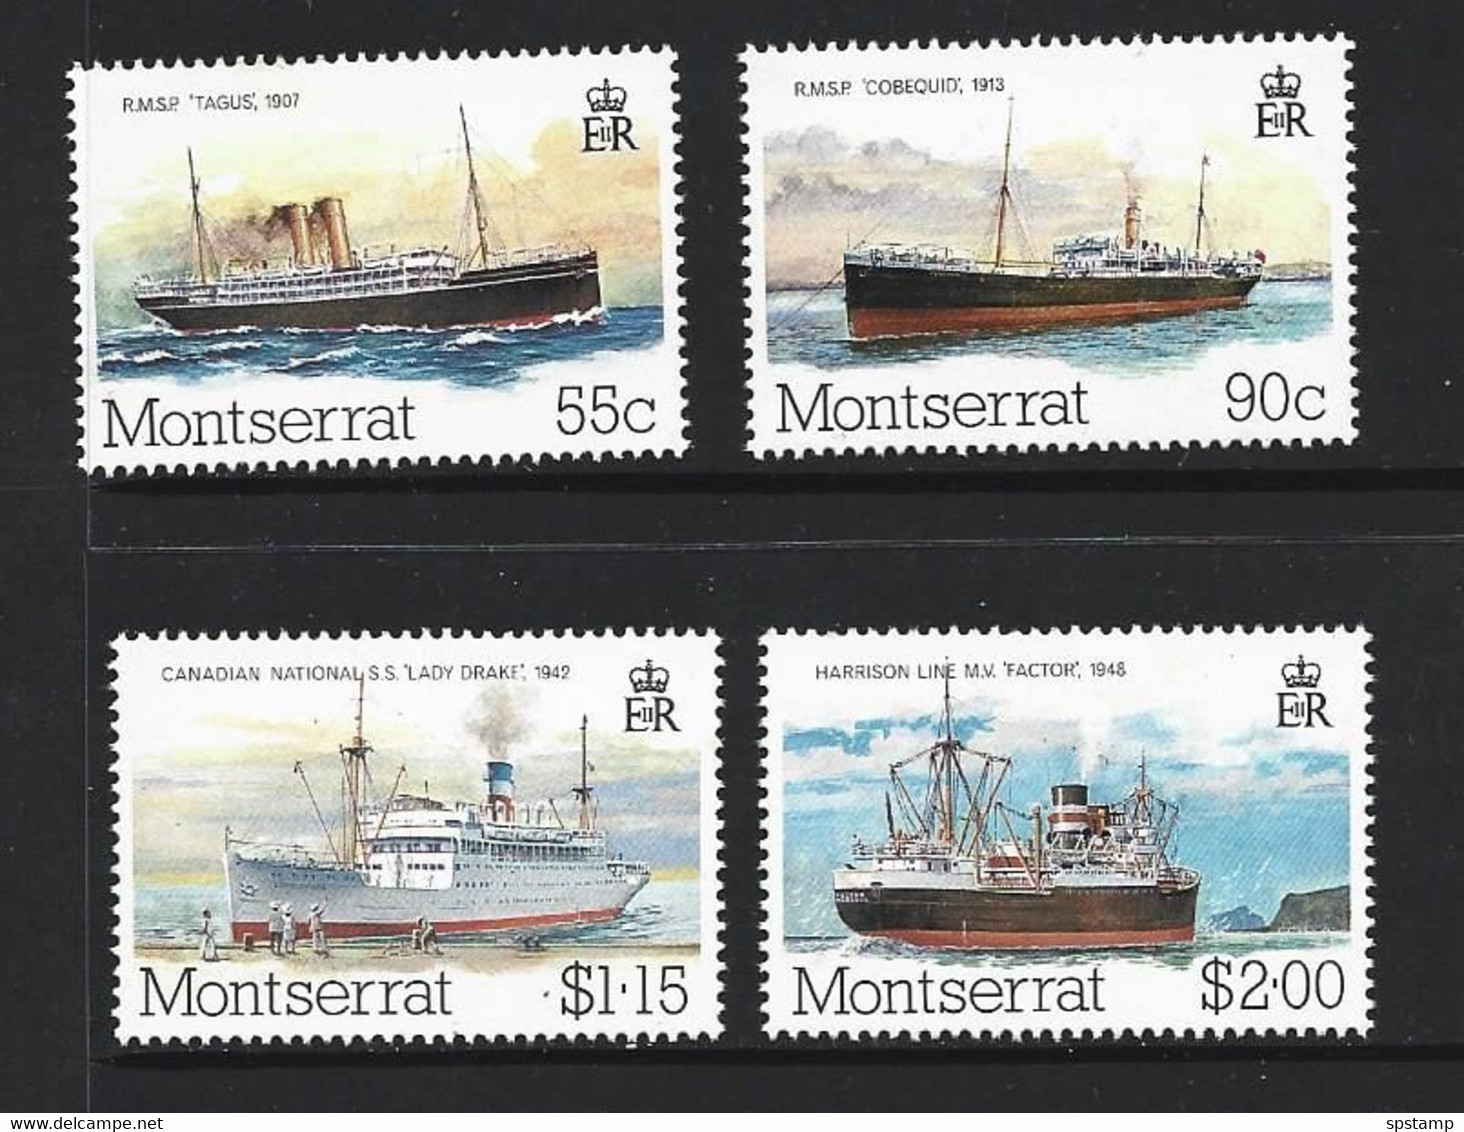 Montserrat 1984 Packet Boat Ship Set Of 4 MNH - Montserrat